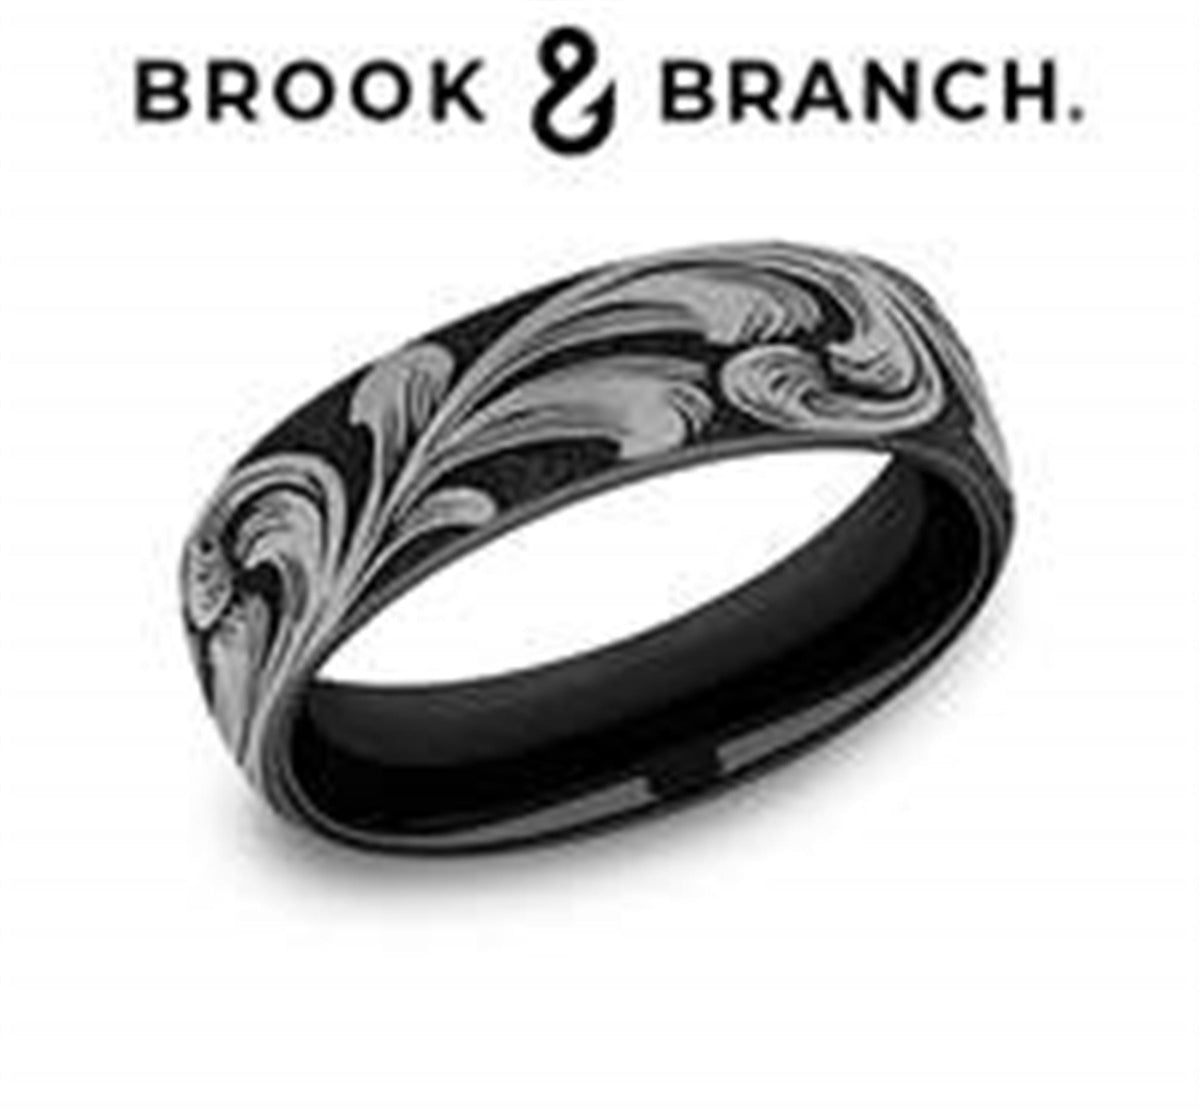 Brook & Branch Titanium Band